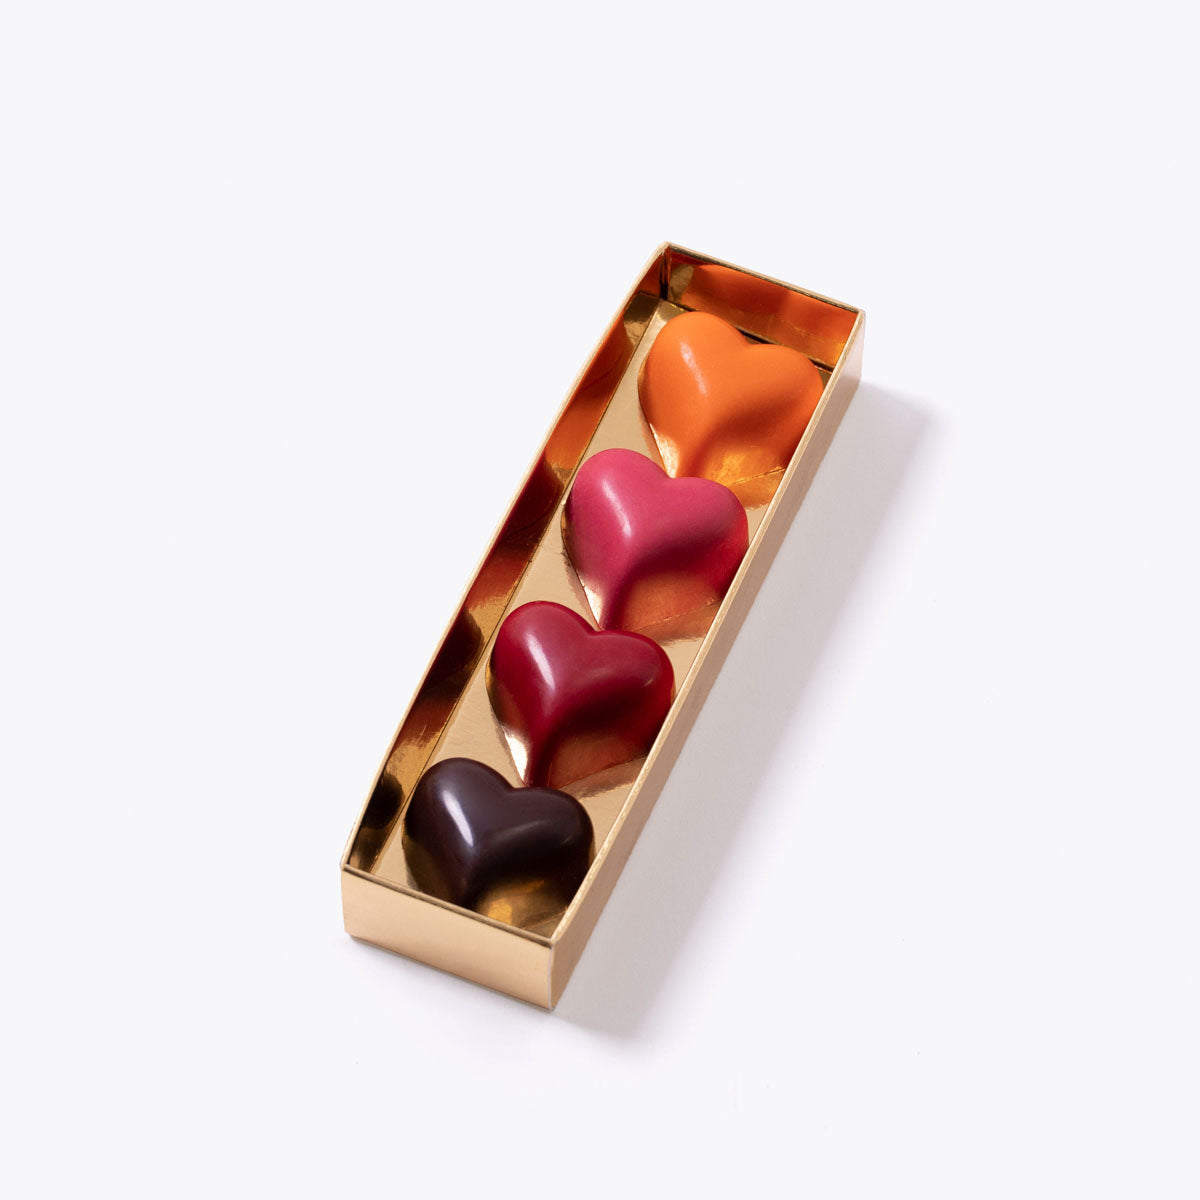 Caja con 4 bombones de diferentes colores